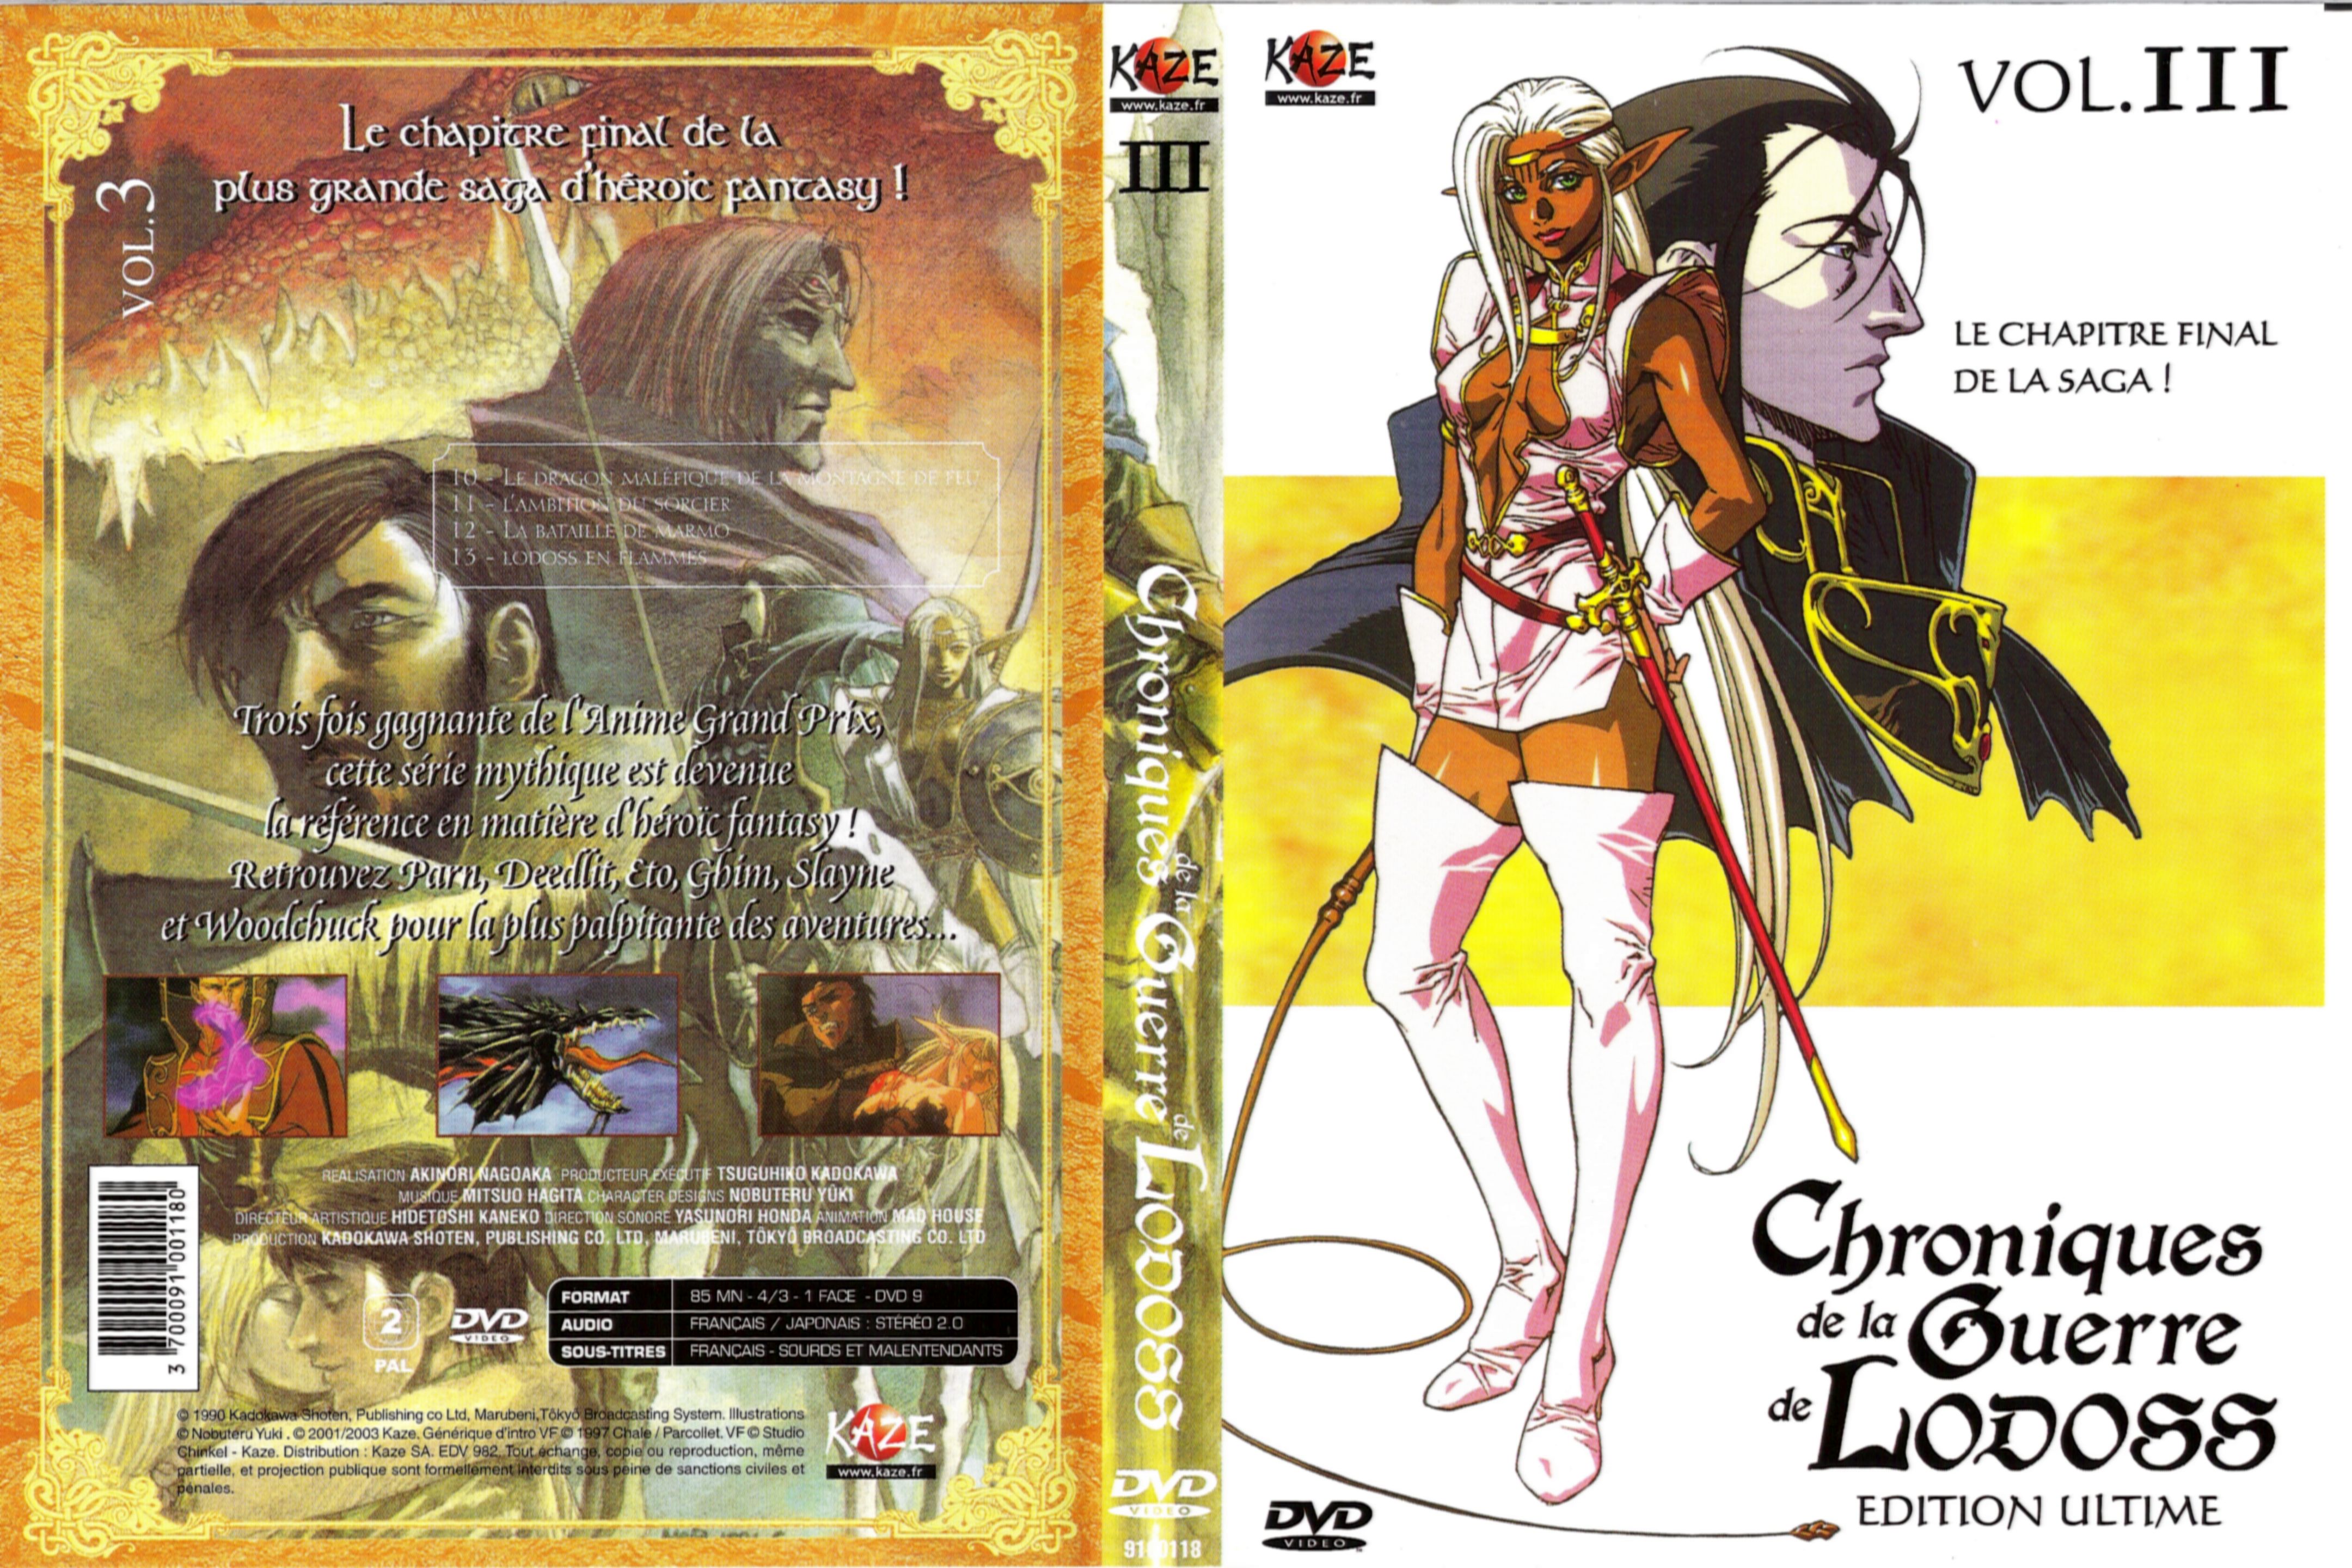 Jaquette DVD Chroniques de la guerre de lodoss vol 3 v2